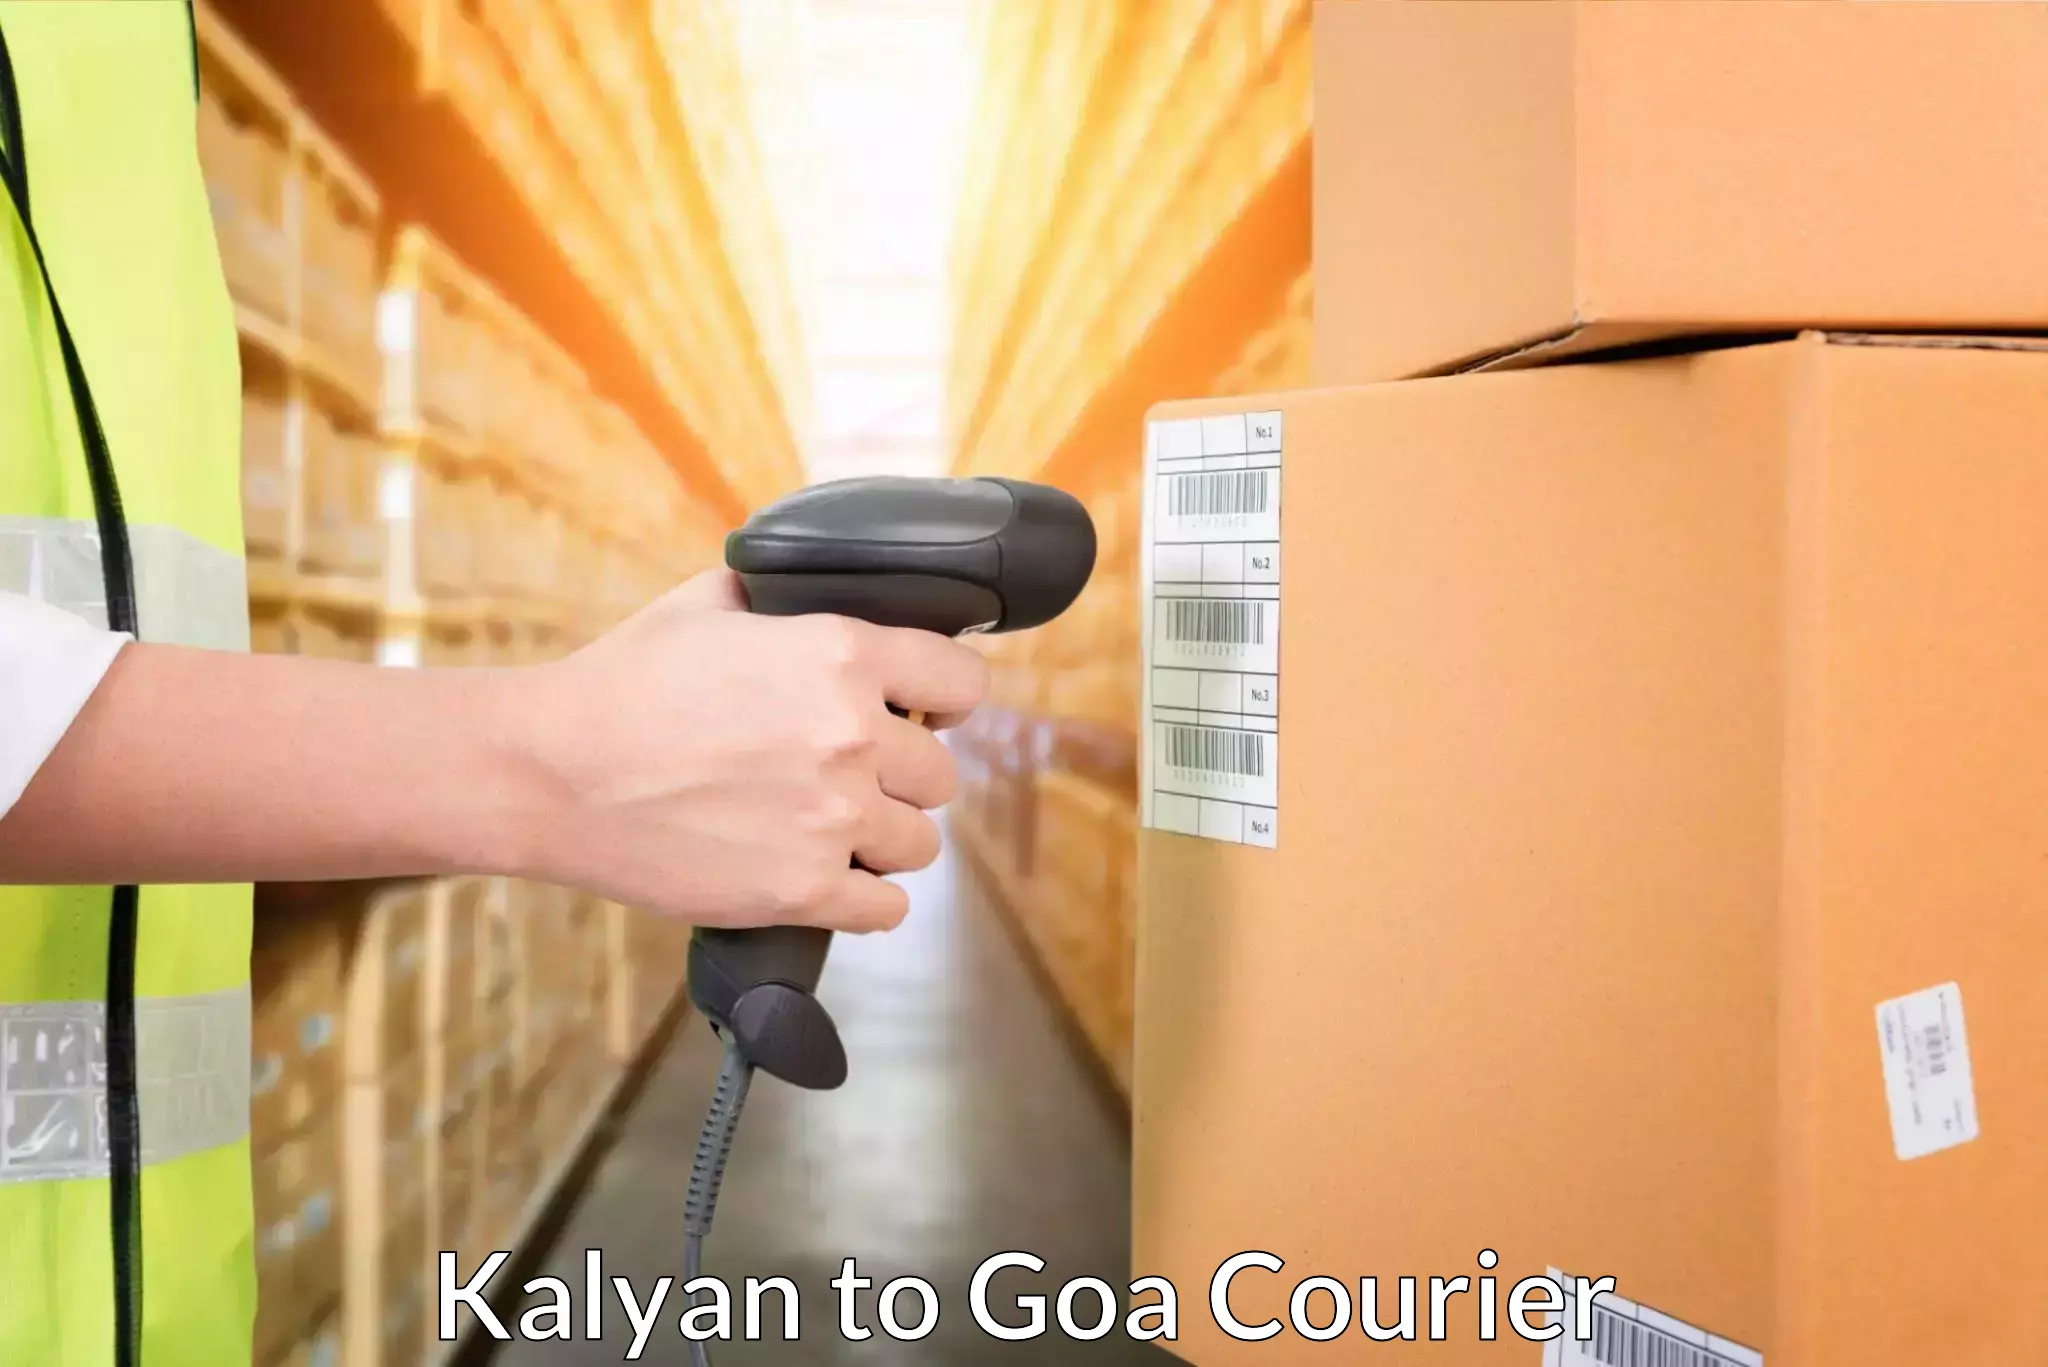 User-friendly courier app Kalyan to South Goa